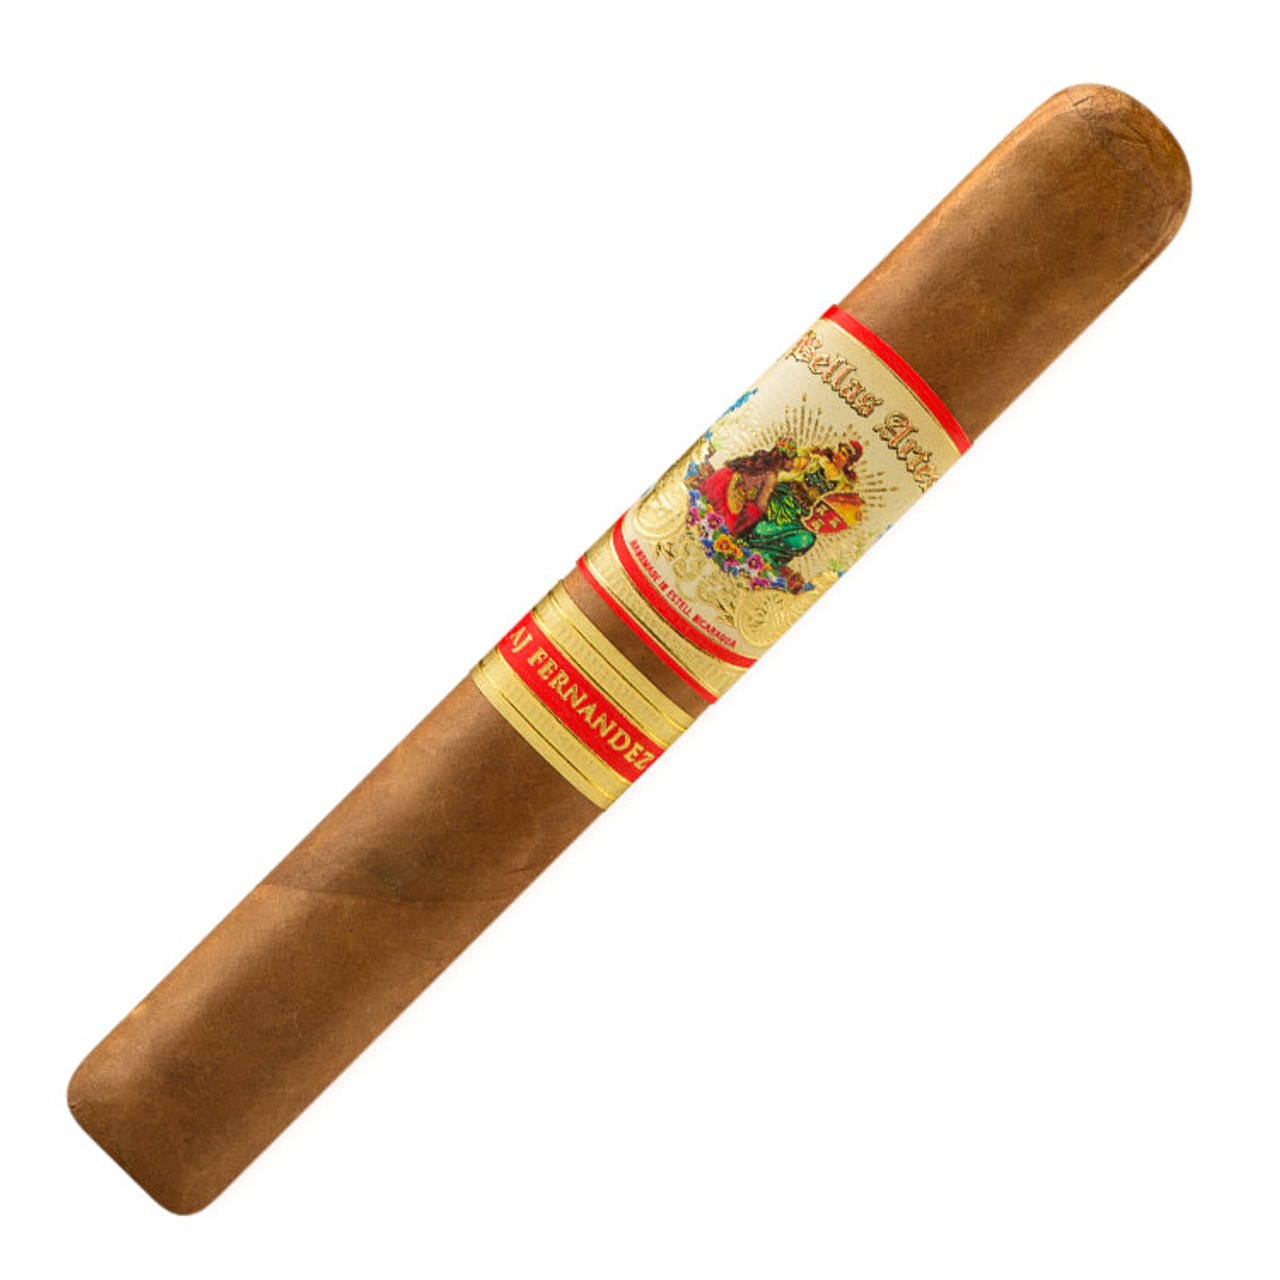 AJ Fernandez Bellas Artes Toro - 6 x 54 Cigars Single